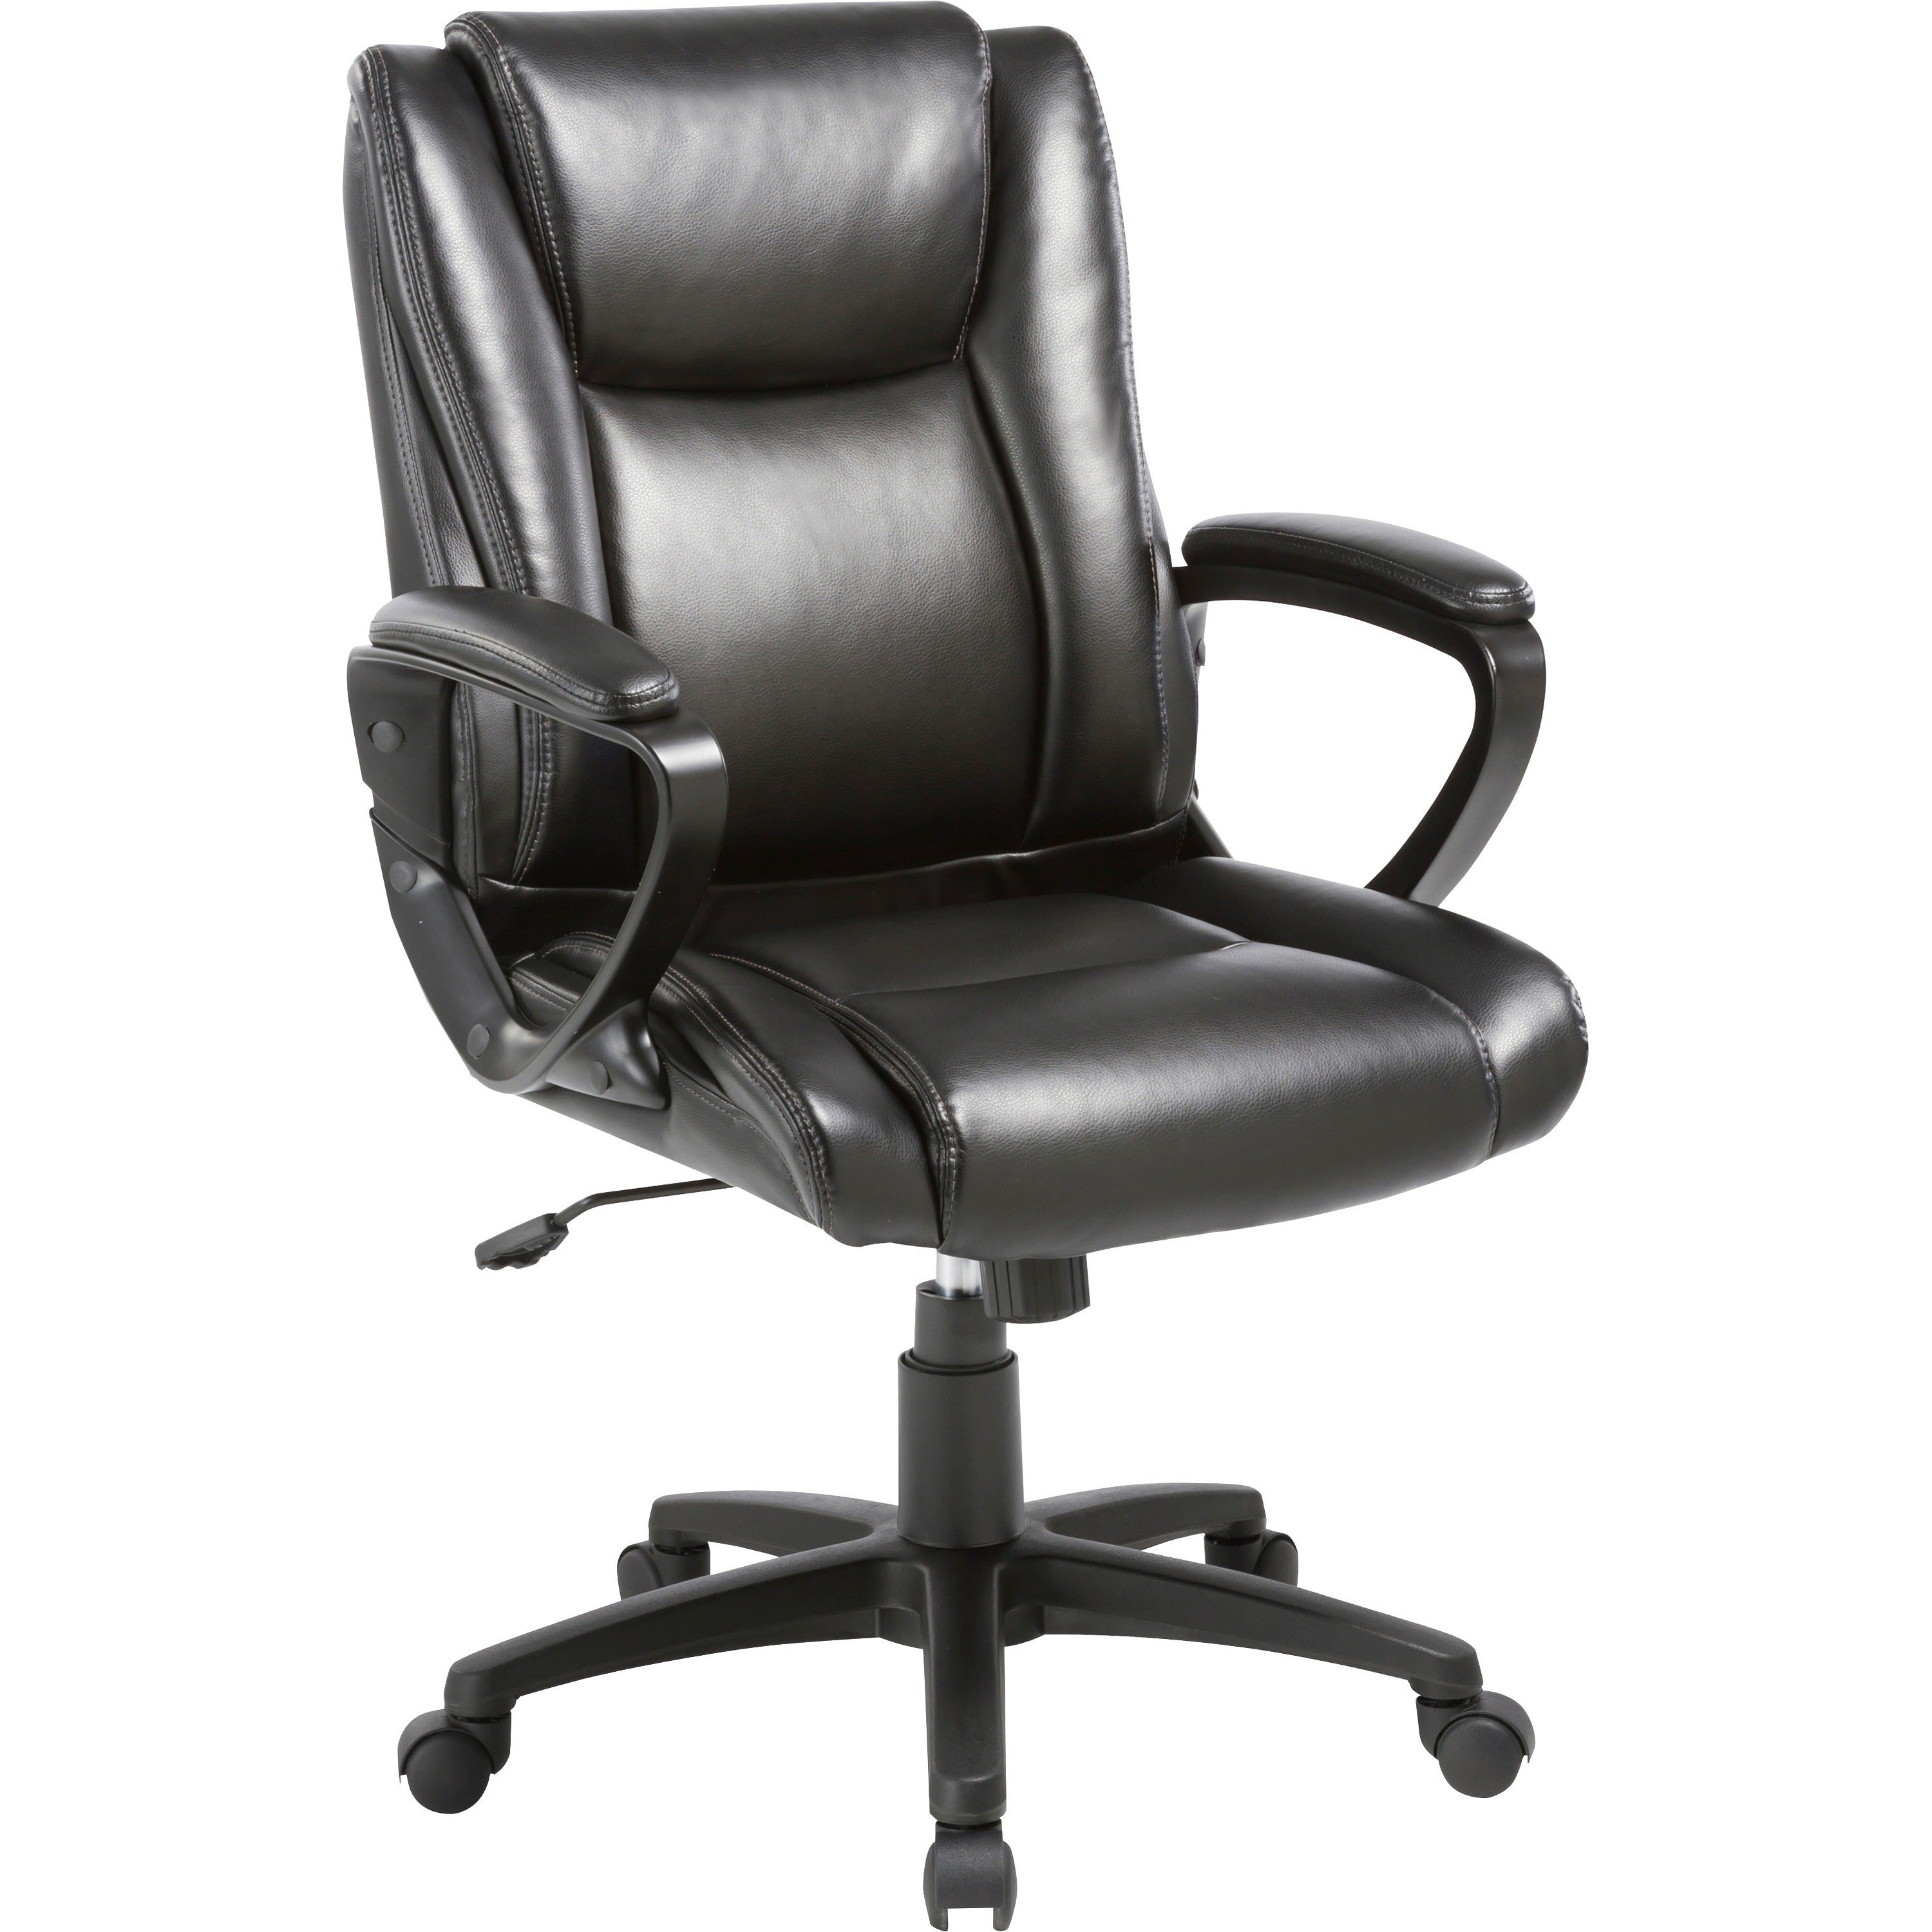 soho-igh-back-office-chair-black-bonded-leather-seat-black-bonded-leather-back-high-back-5-star-base-1-each_llr81801 - 1